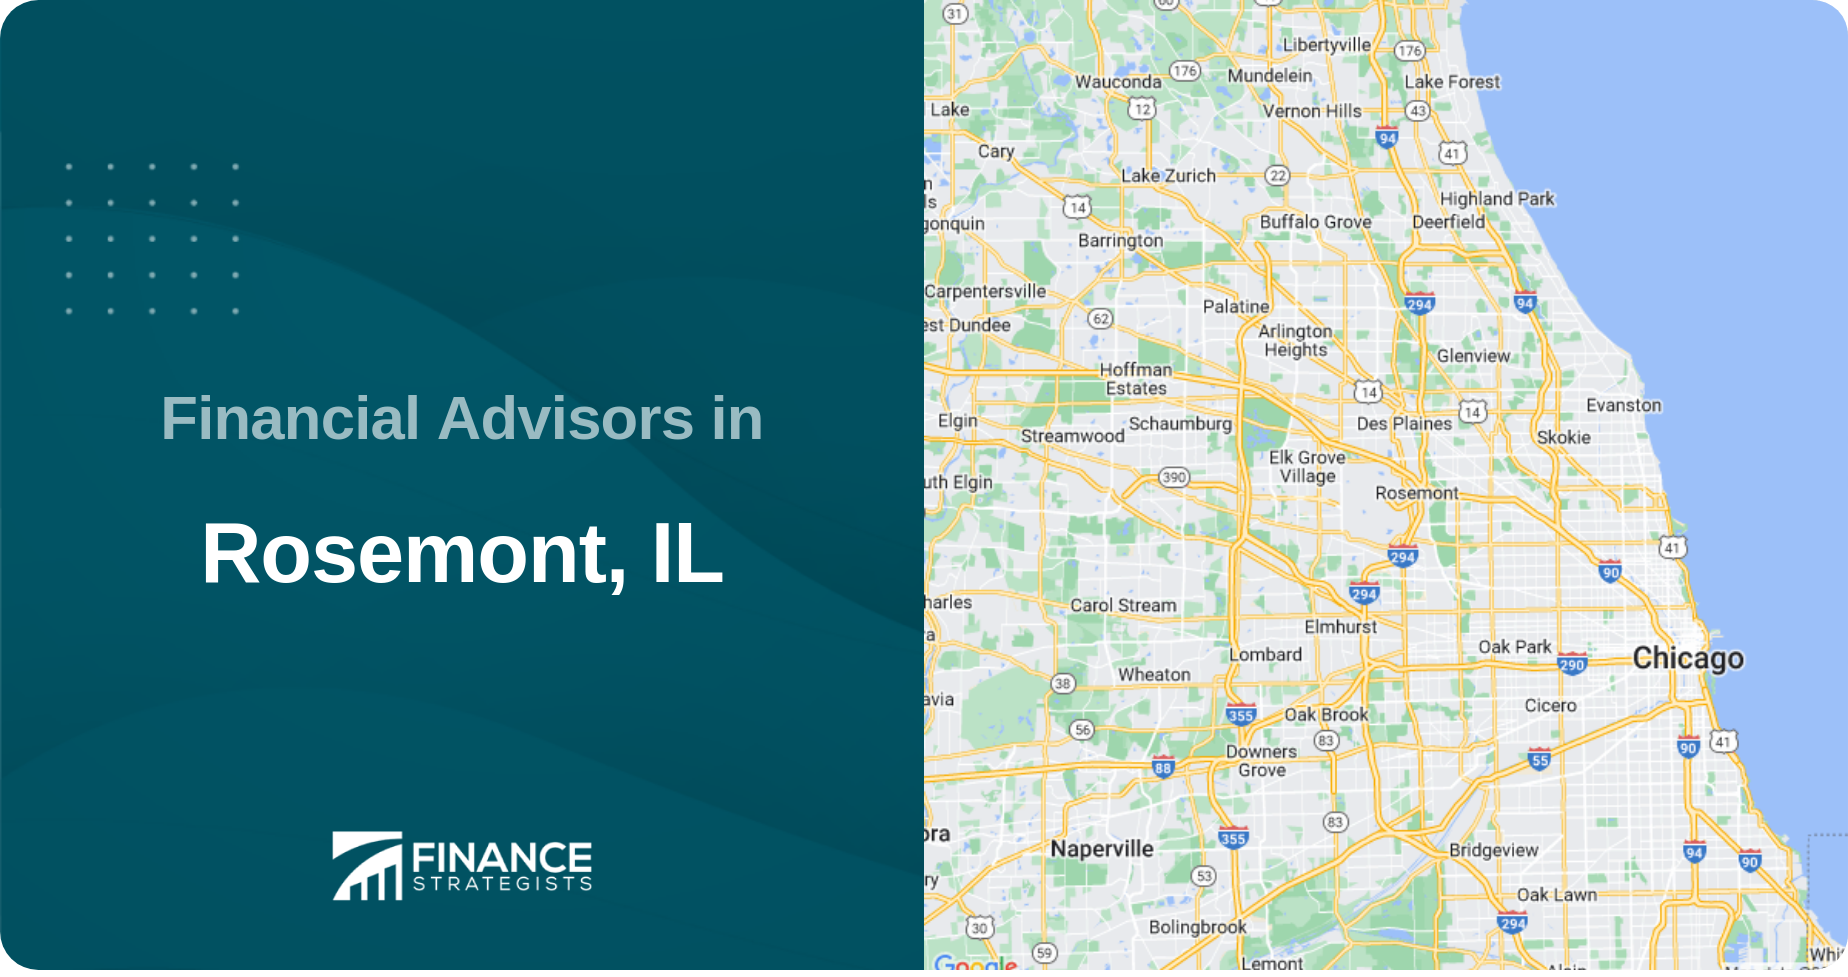 Financial Advisors in Rosemont, IL